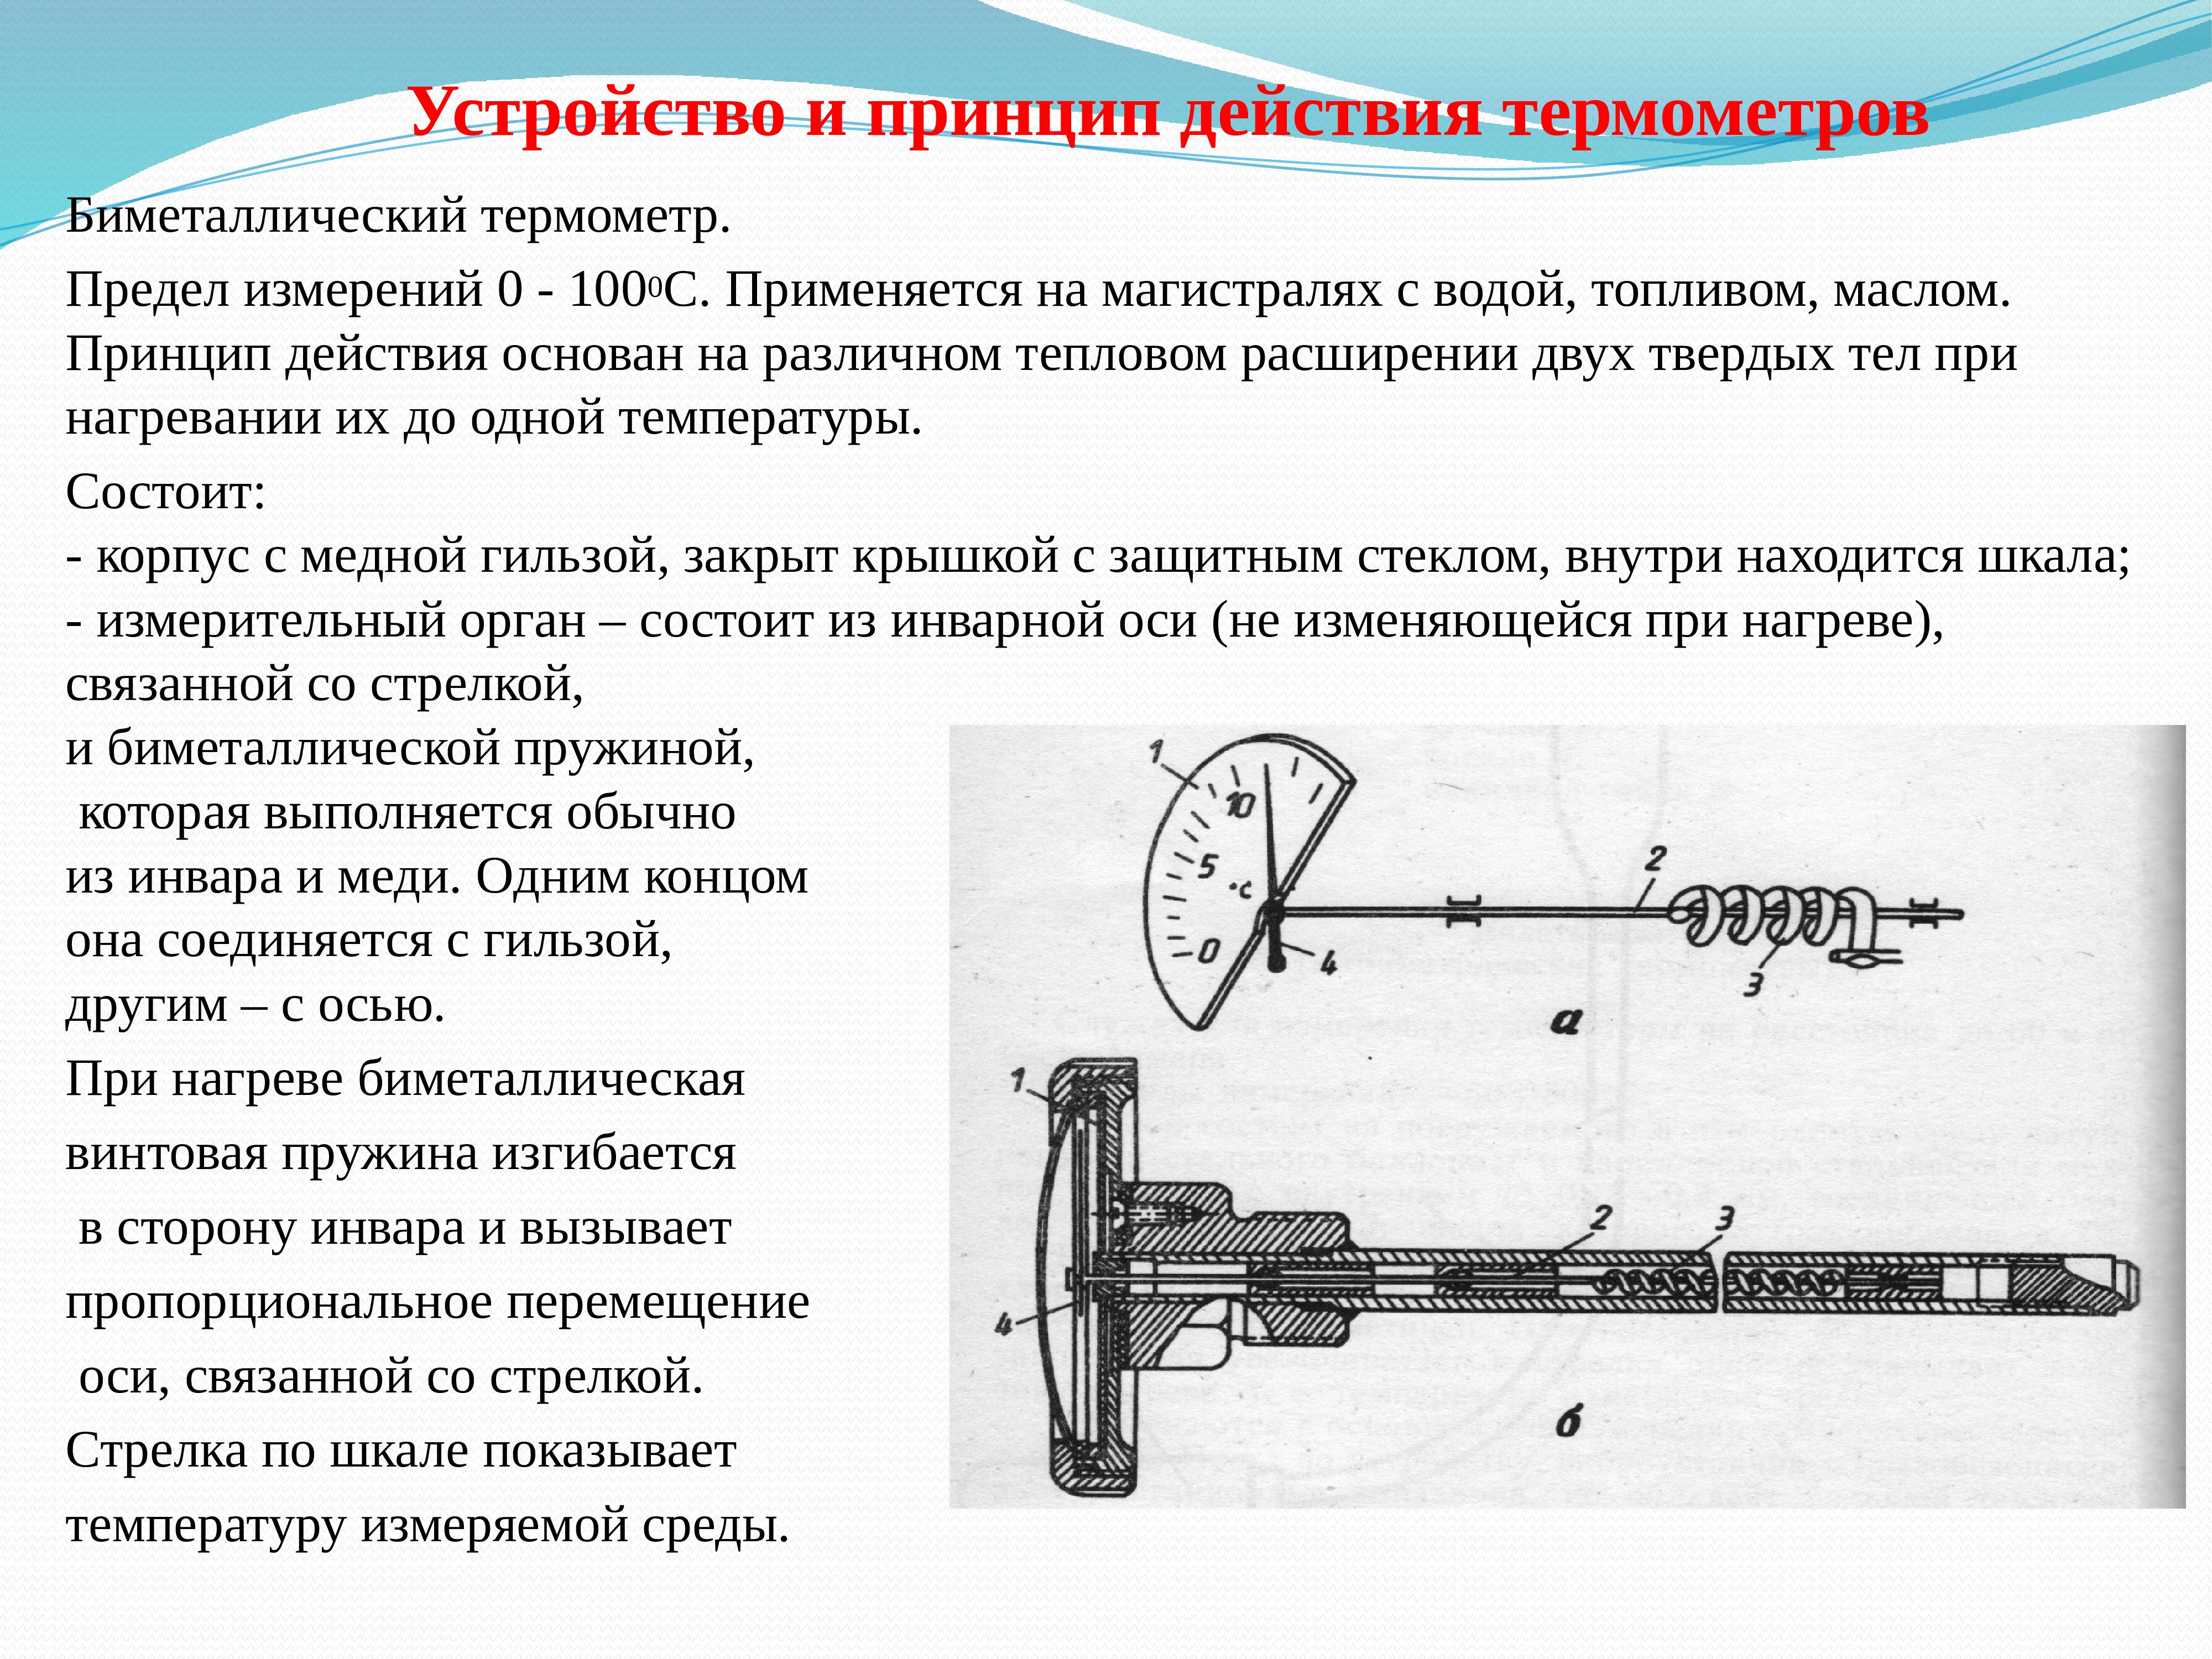 Название прибора принцип действия. Биметаллический термометр принцип действия устройство.